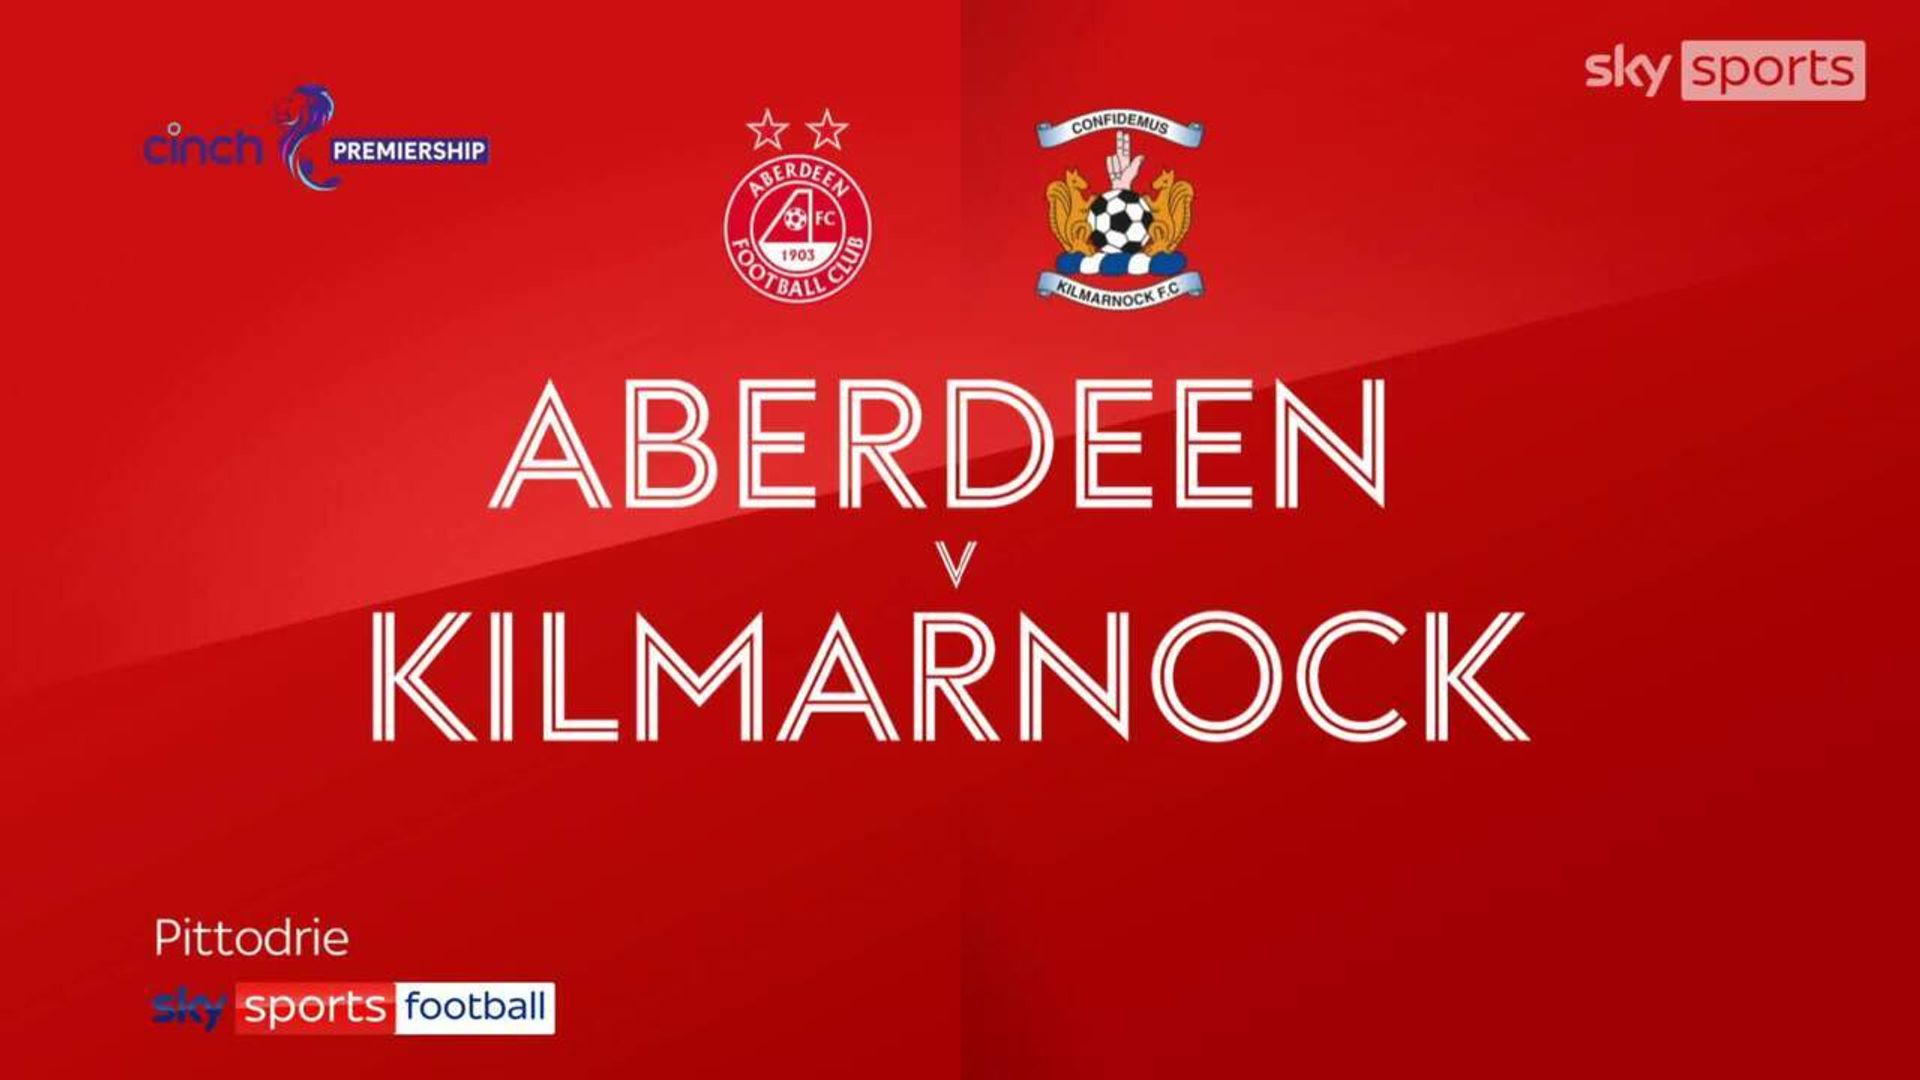 Aberdeen 4-1 Kilmarnock